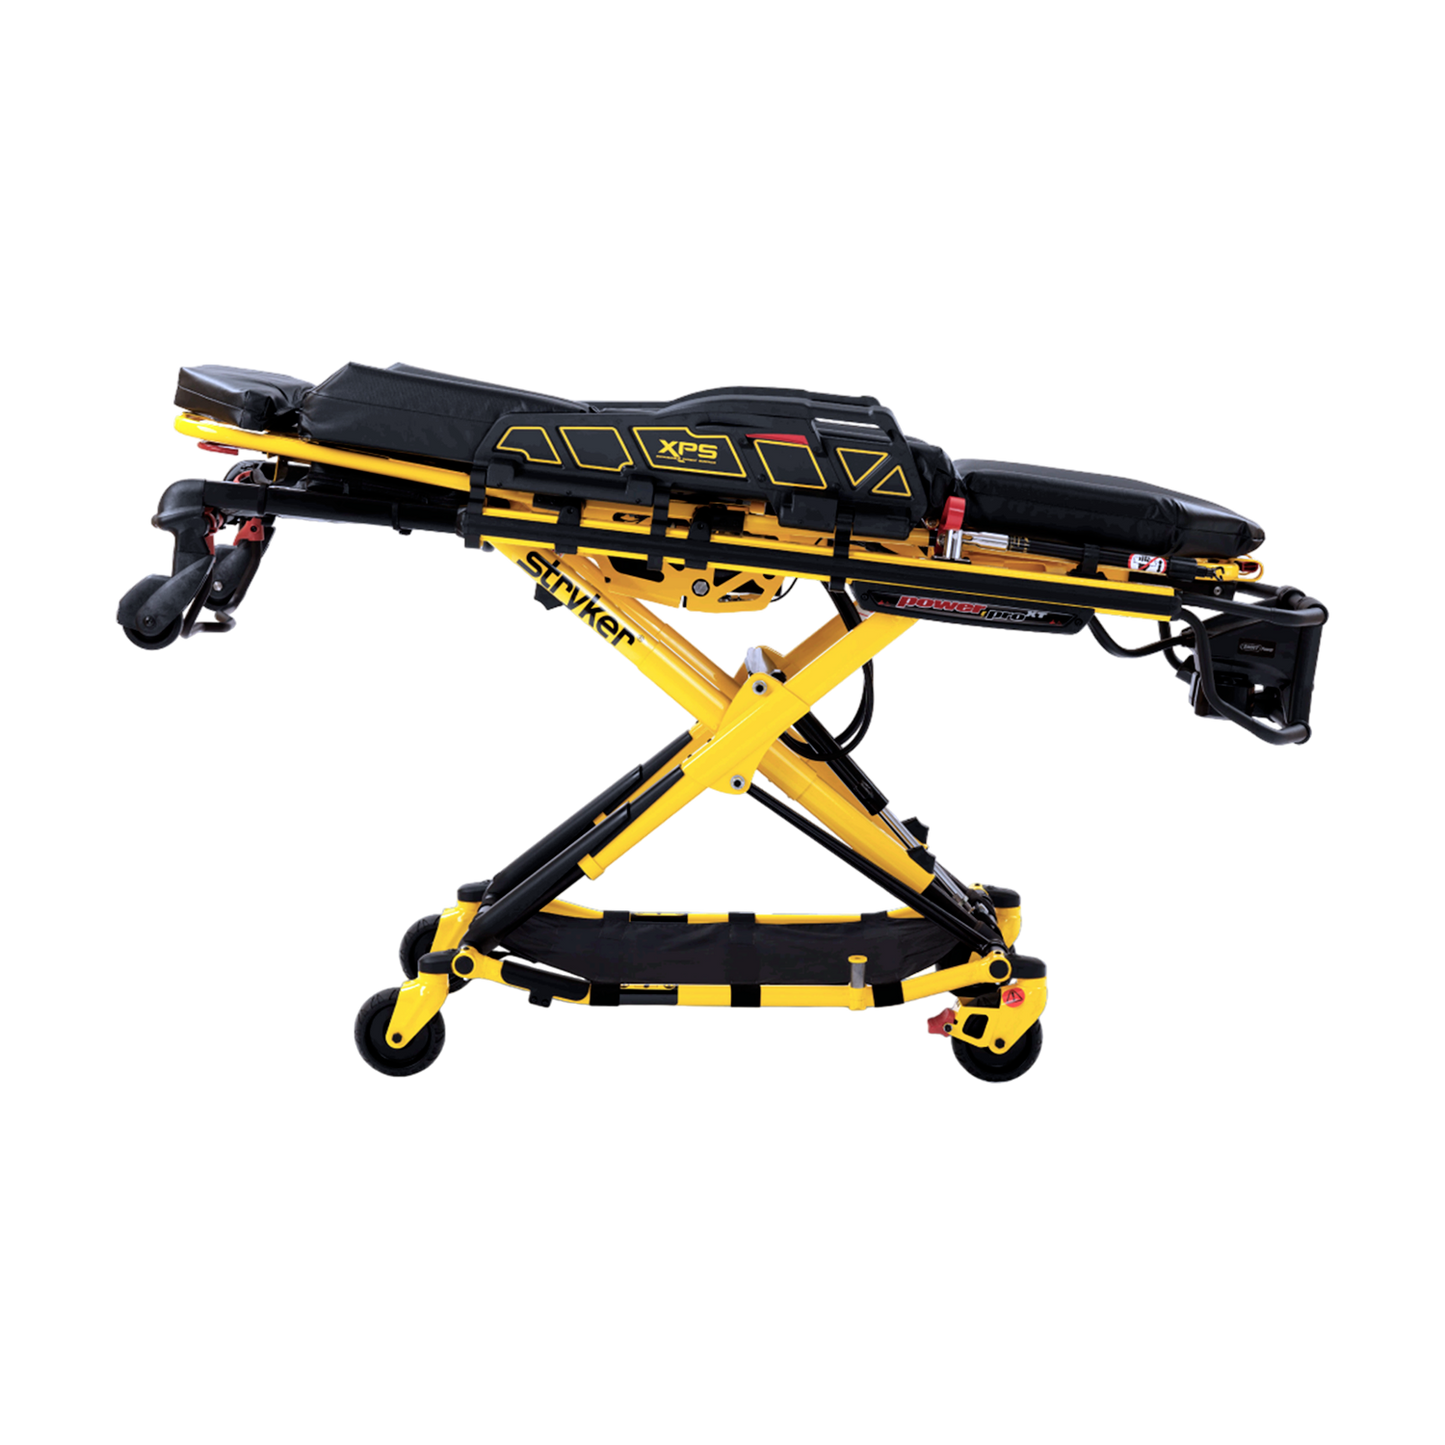 Stryker 6506 Power-Pro XT Ambulance Cot/Stretcher